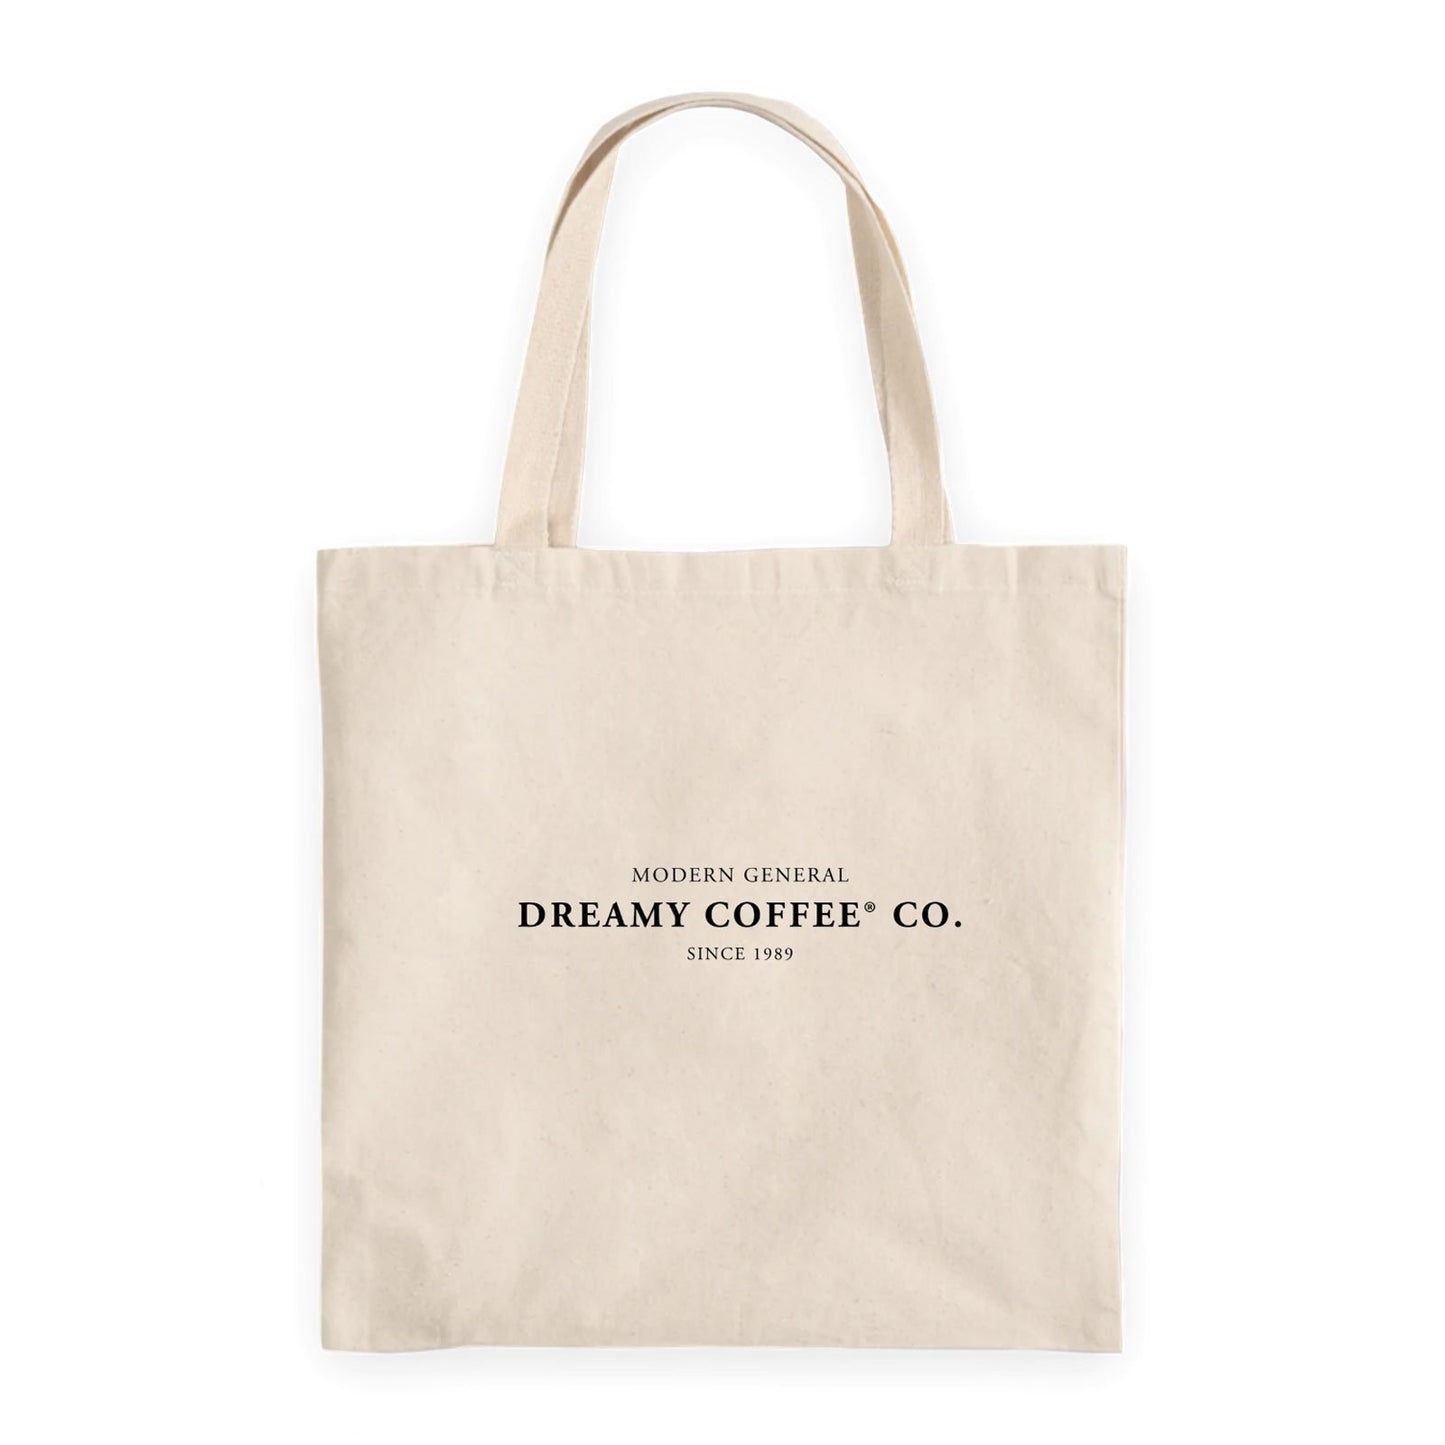 Dreamy Coffee Co. Tote Bag